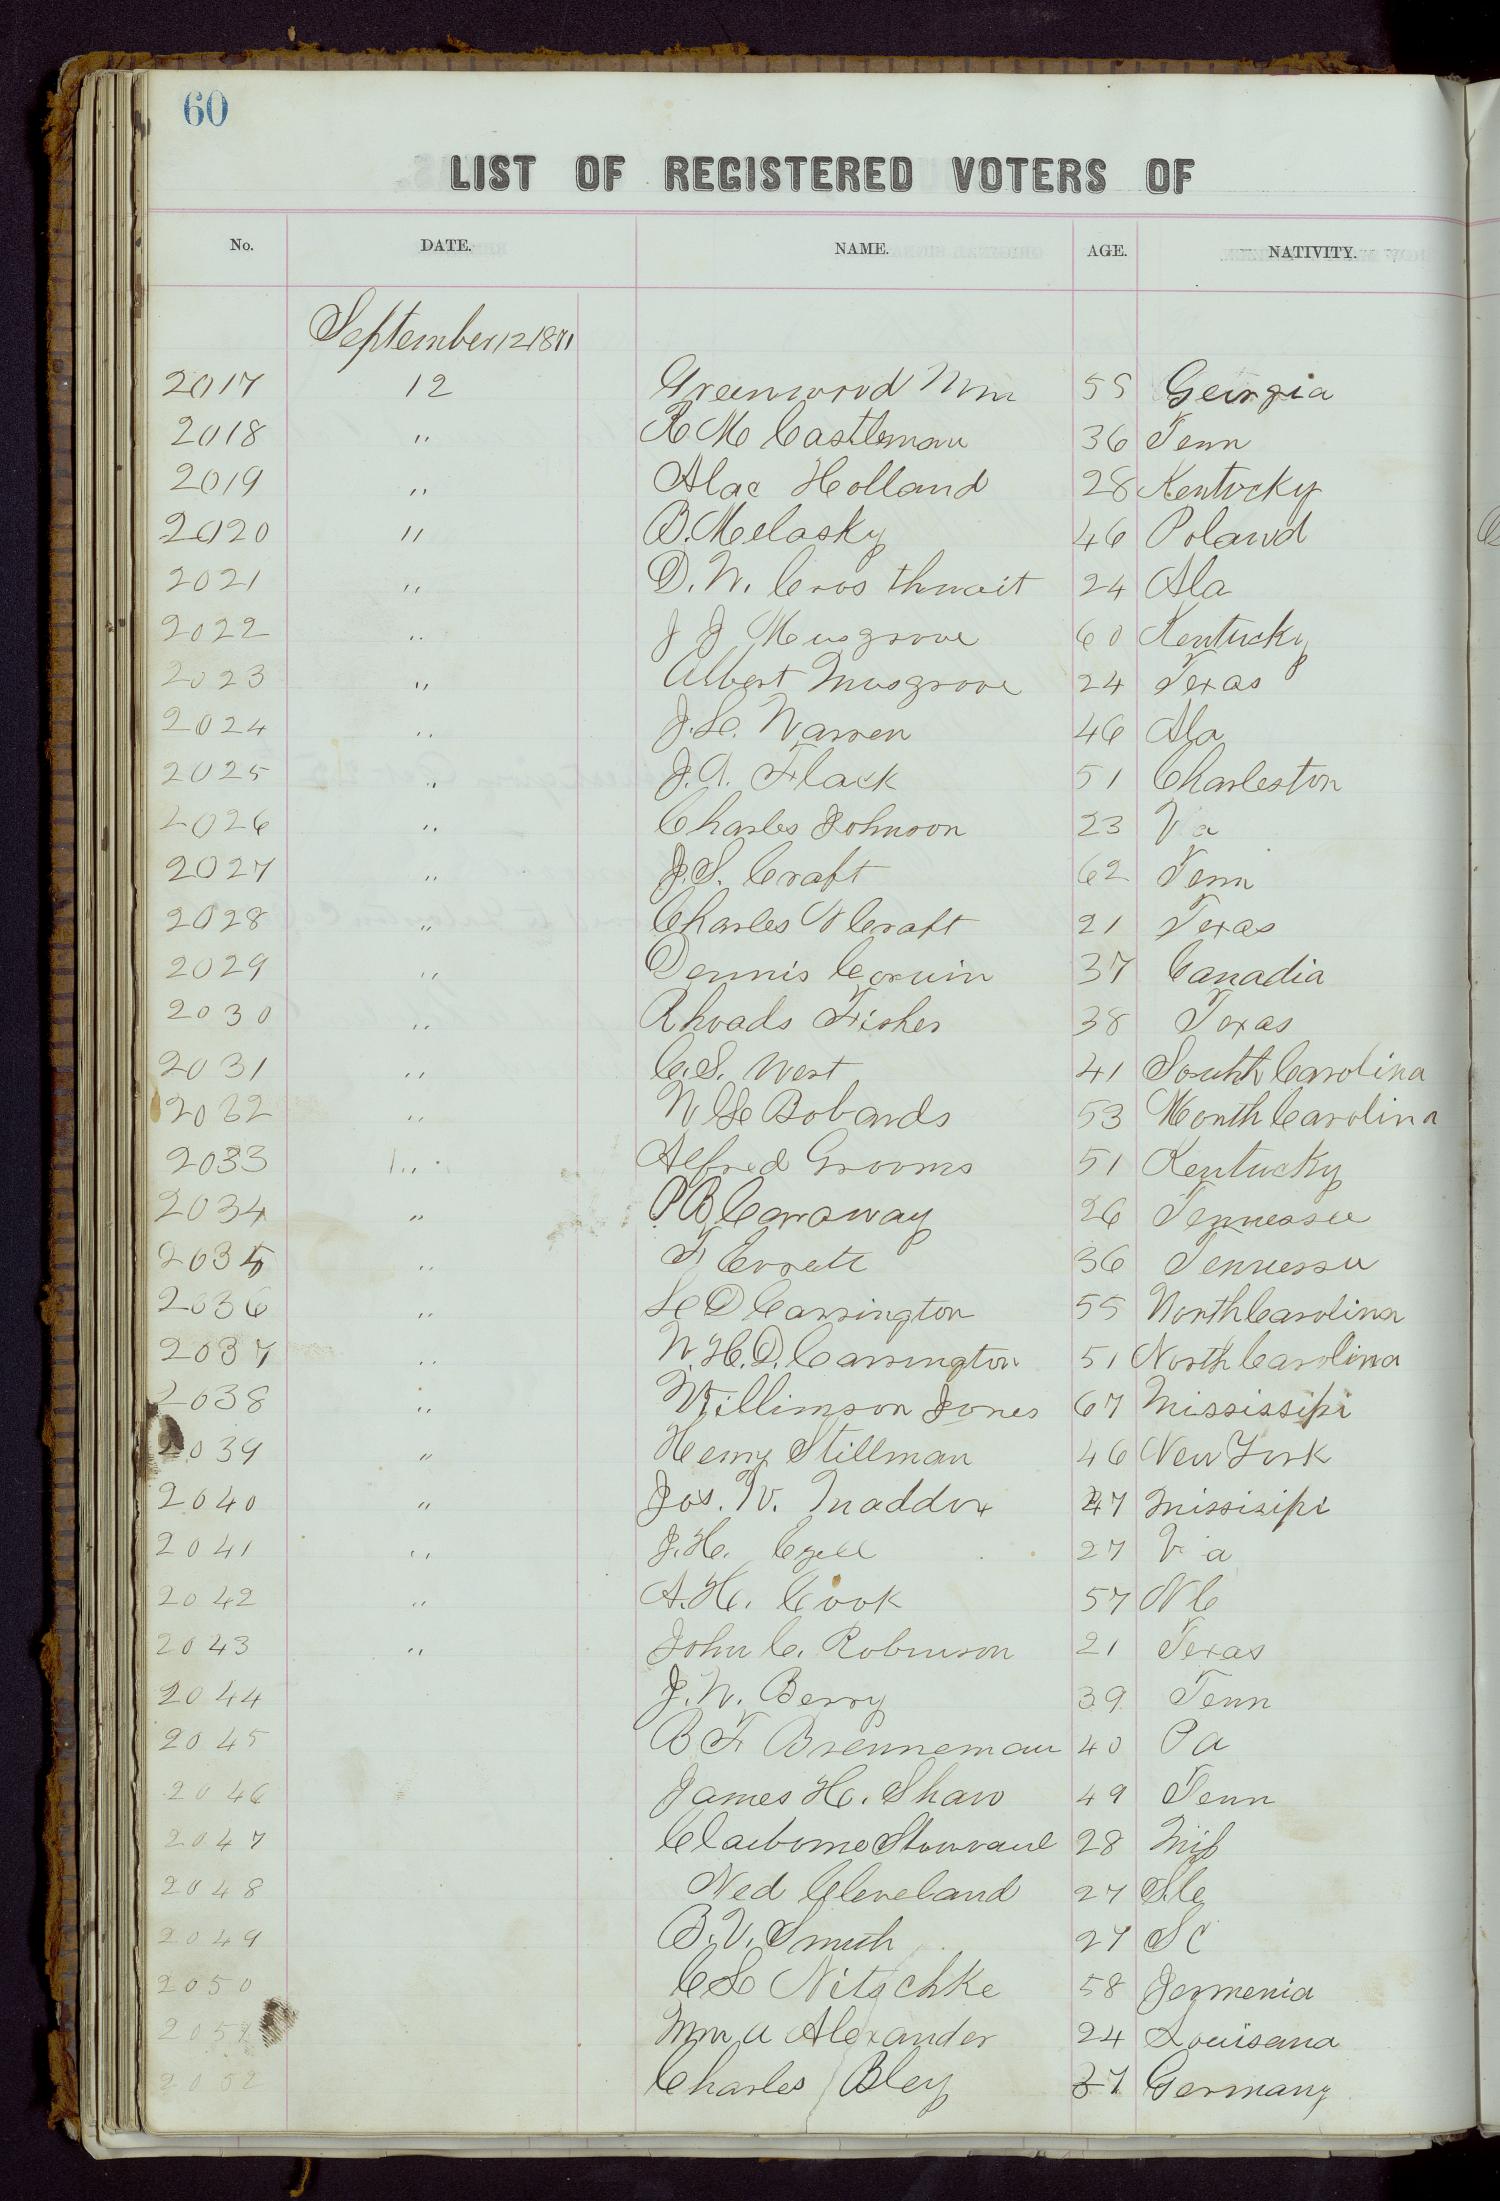 Travis County Election Records: Voter Registration List 1867
                                                
                                                    60
                                                